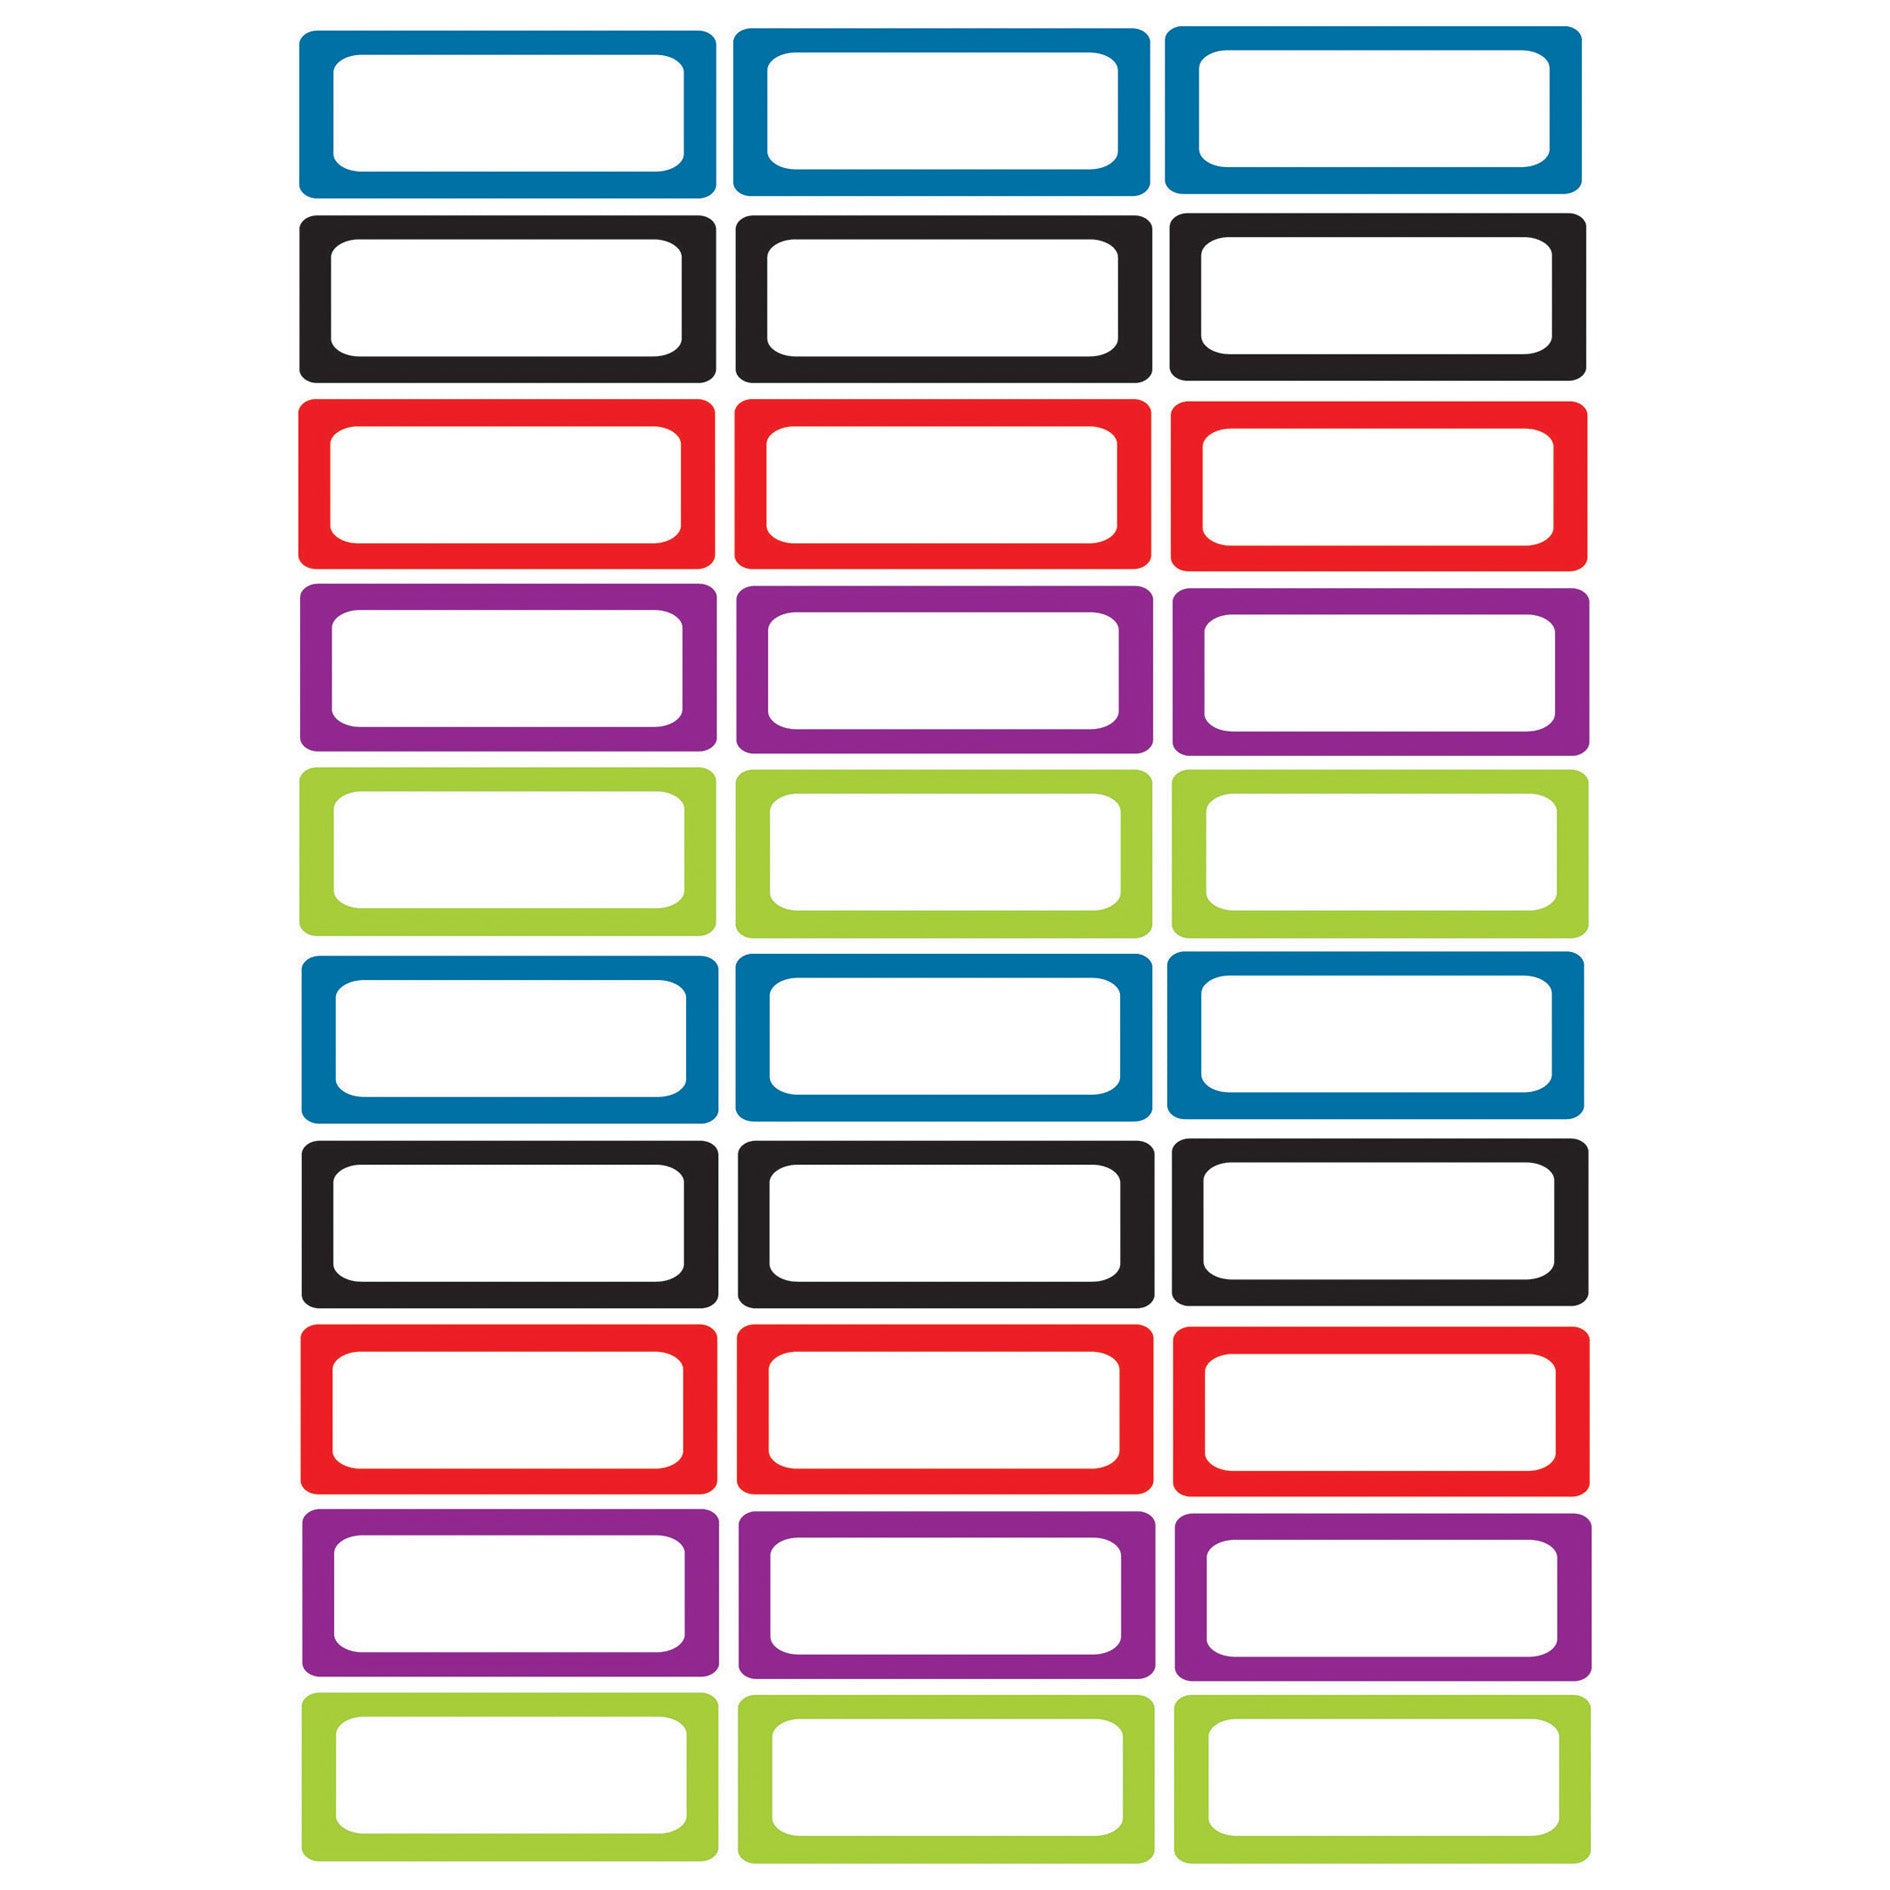 Die-Cut Magnetic Foam Assorted Color Labels/Nameplates, 30 Per Pack, 3 Packs